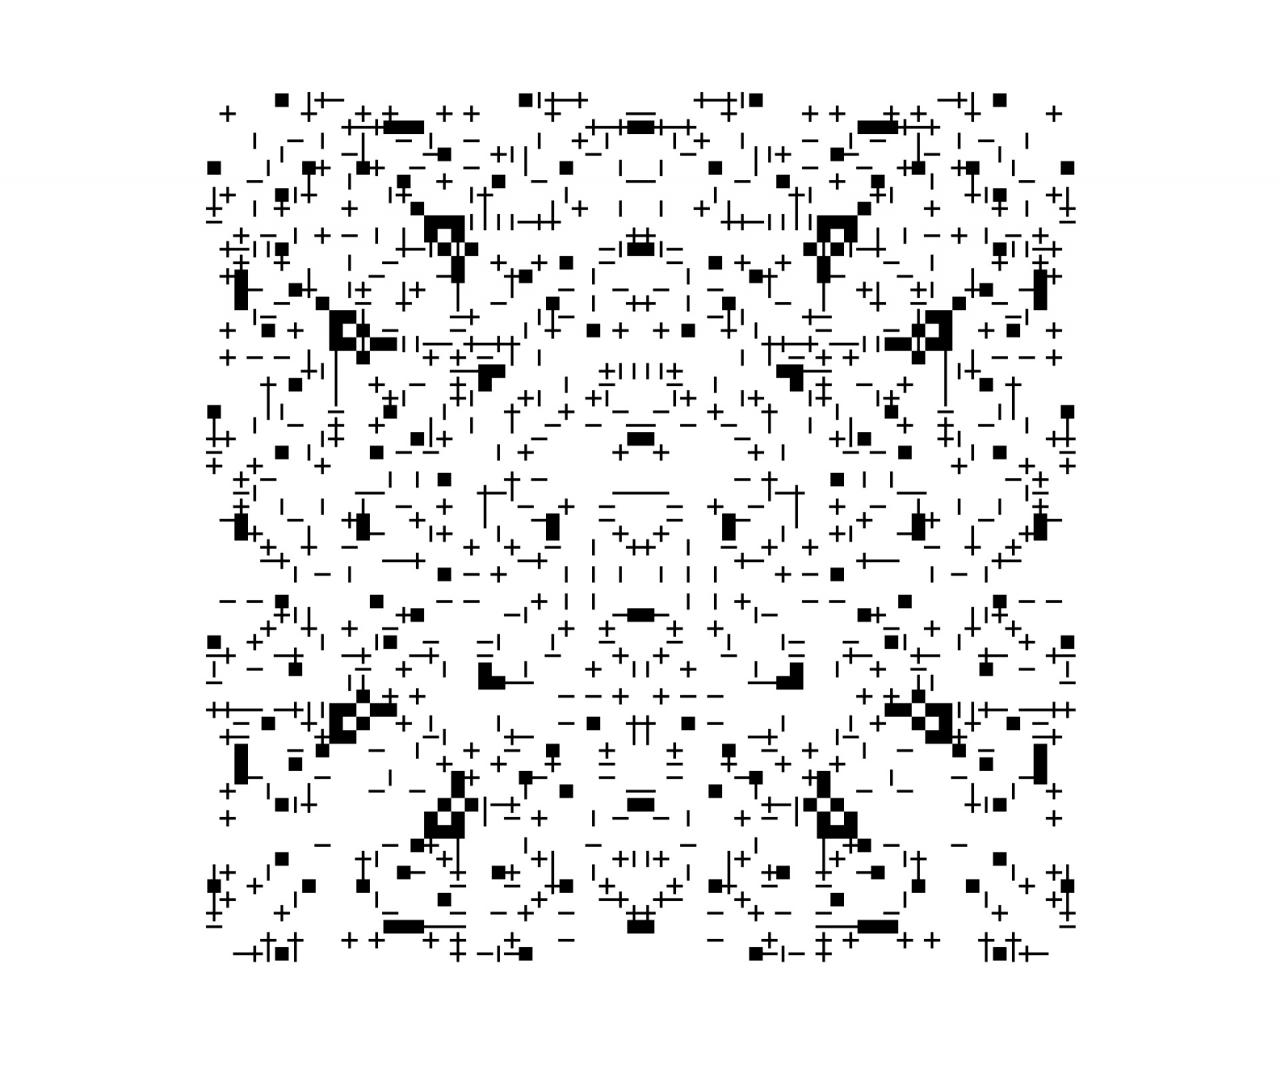 Black pixels against white background form a pattern